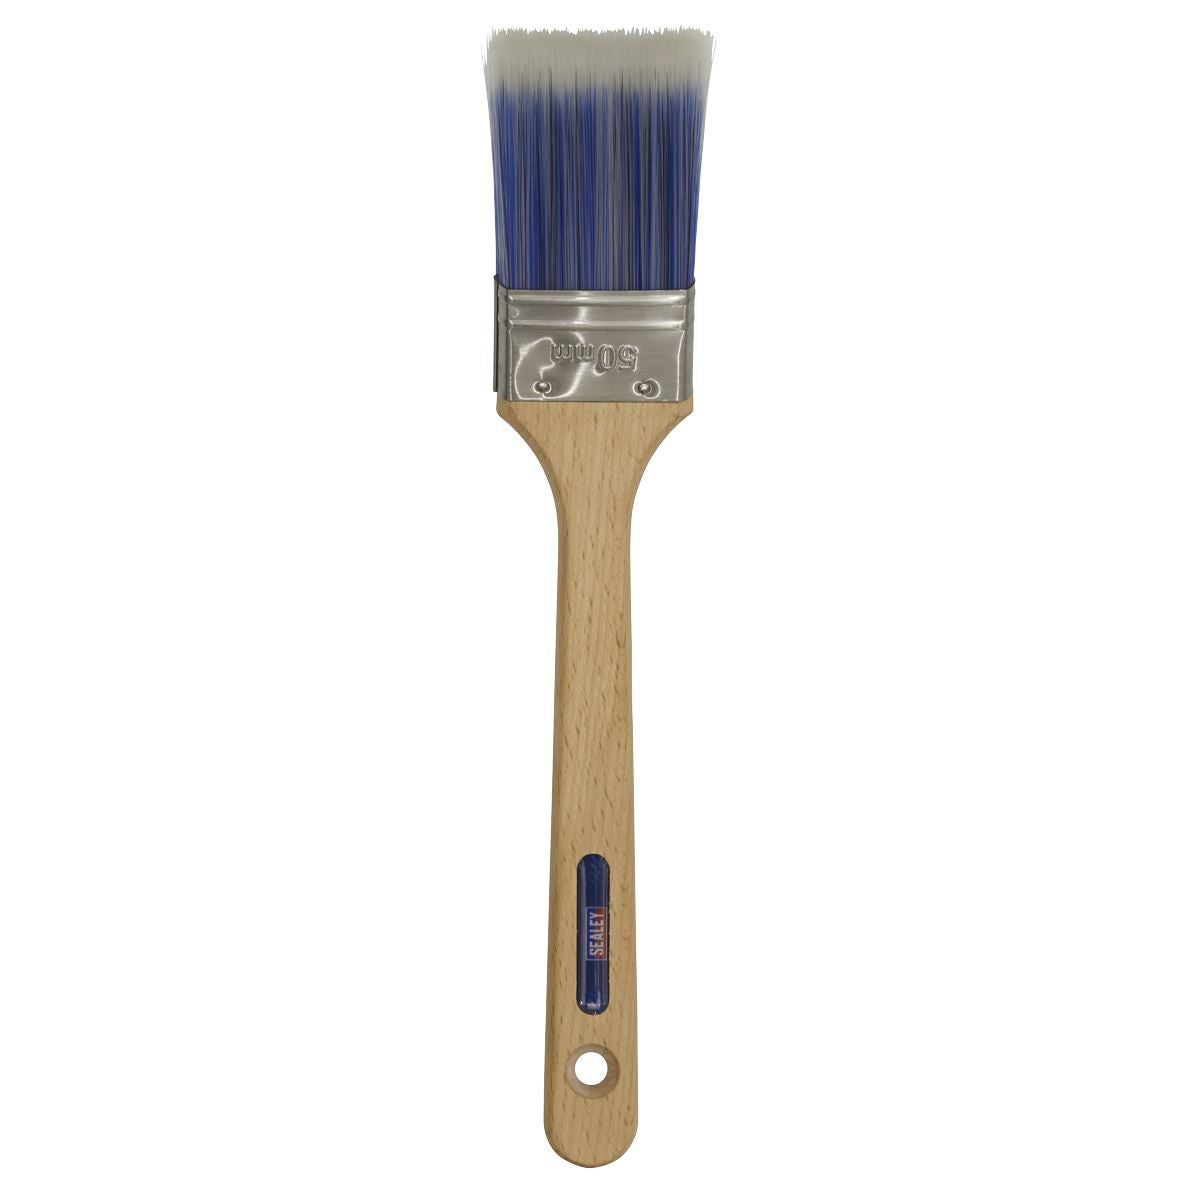 Sealey Wooden Handle Radiator Paint Brush 50mm